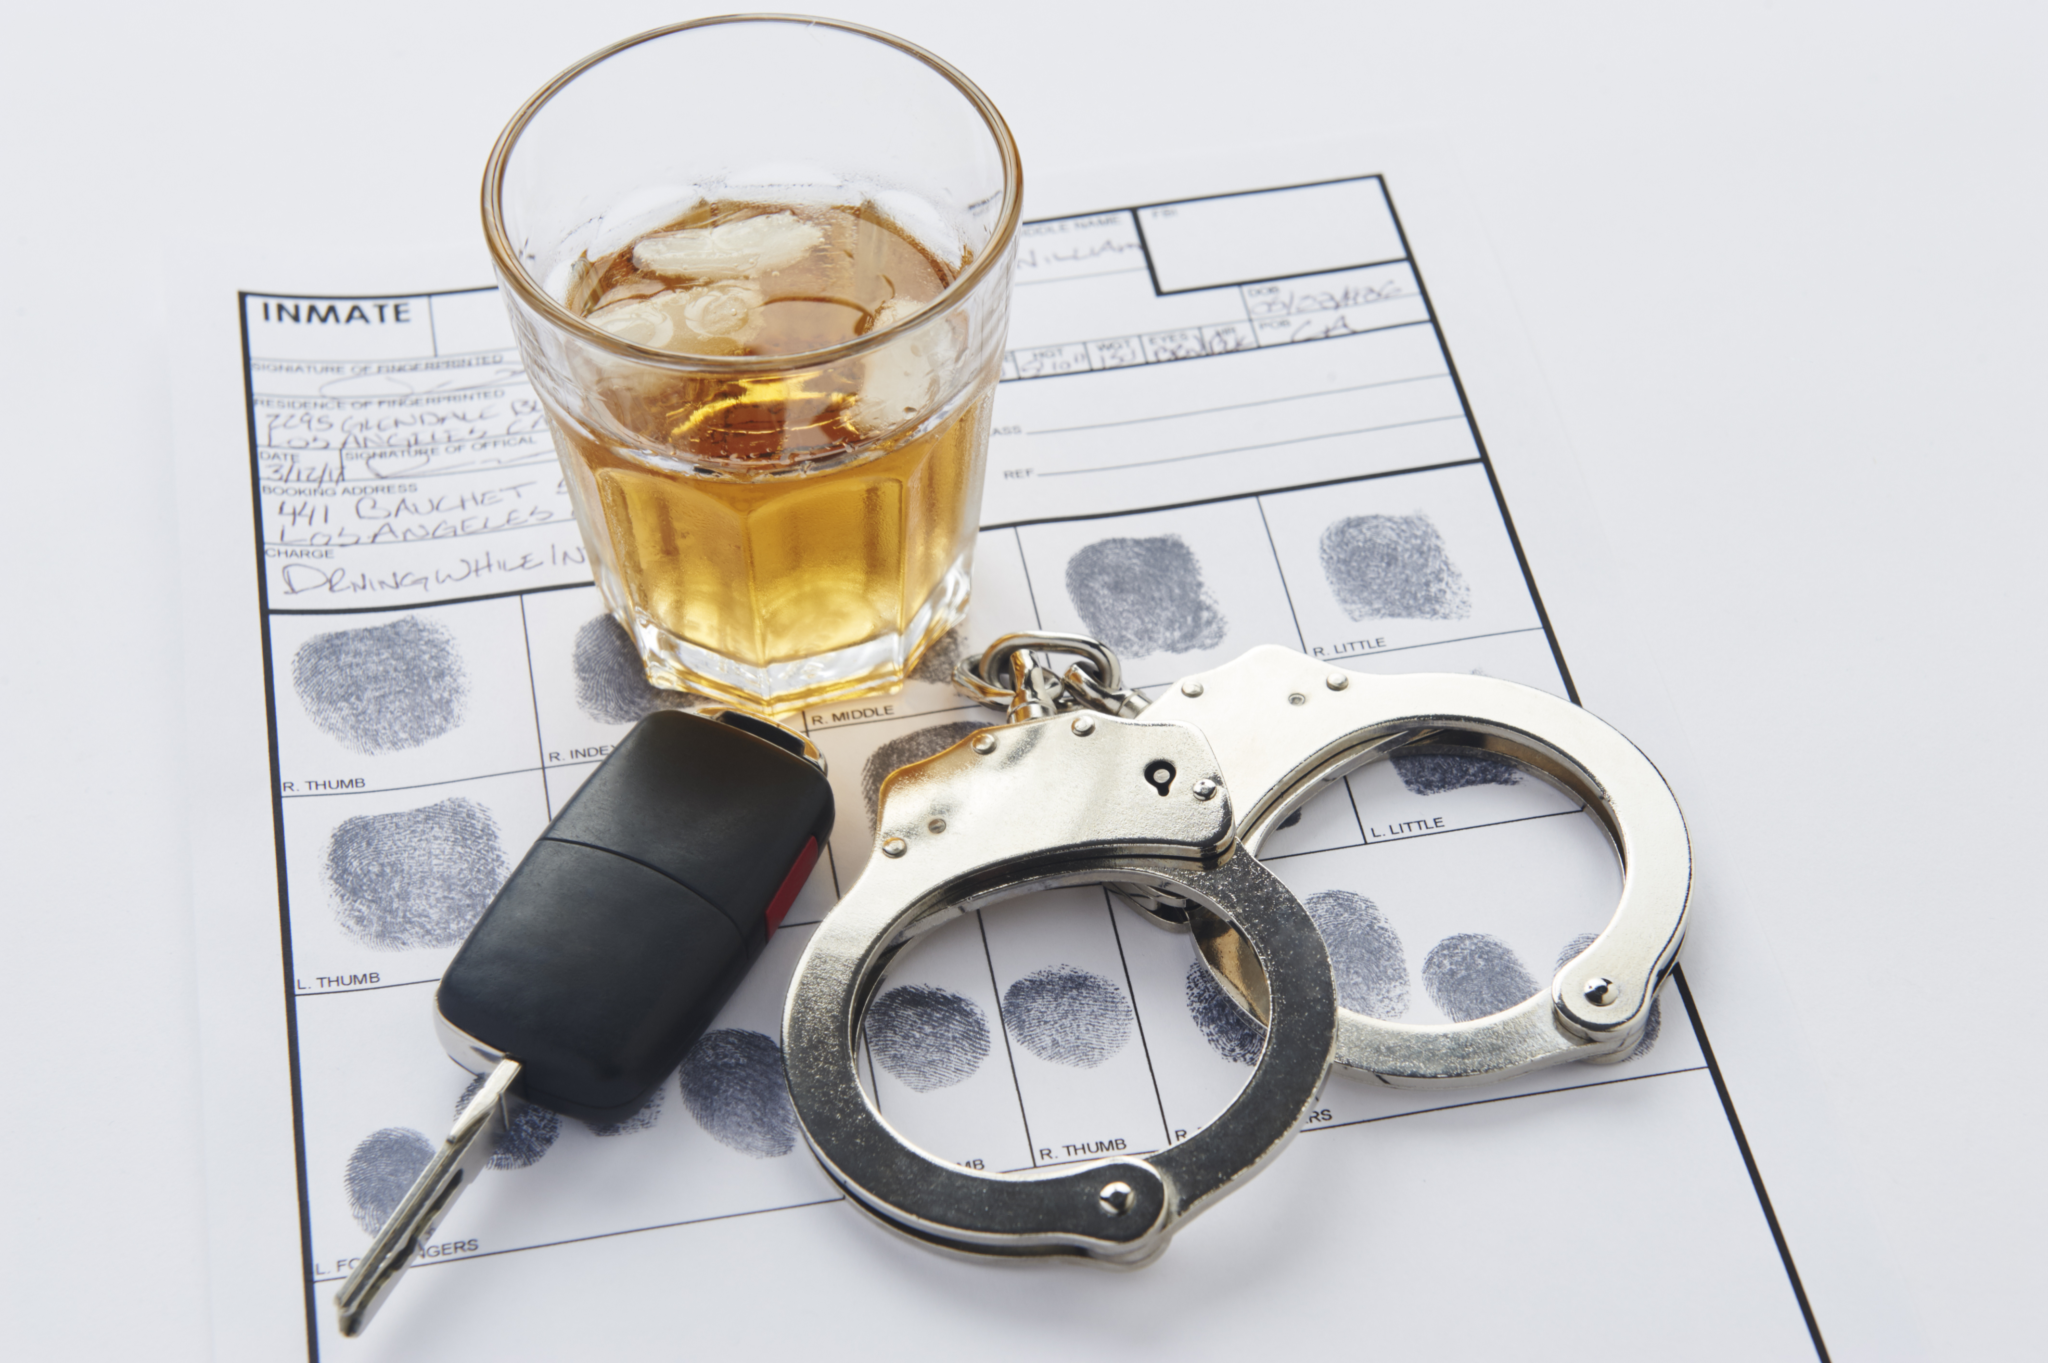 Handcuffs, drink and car keys